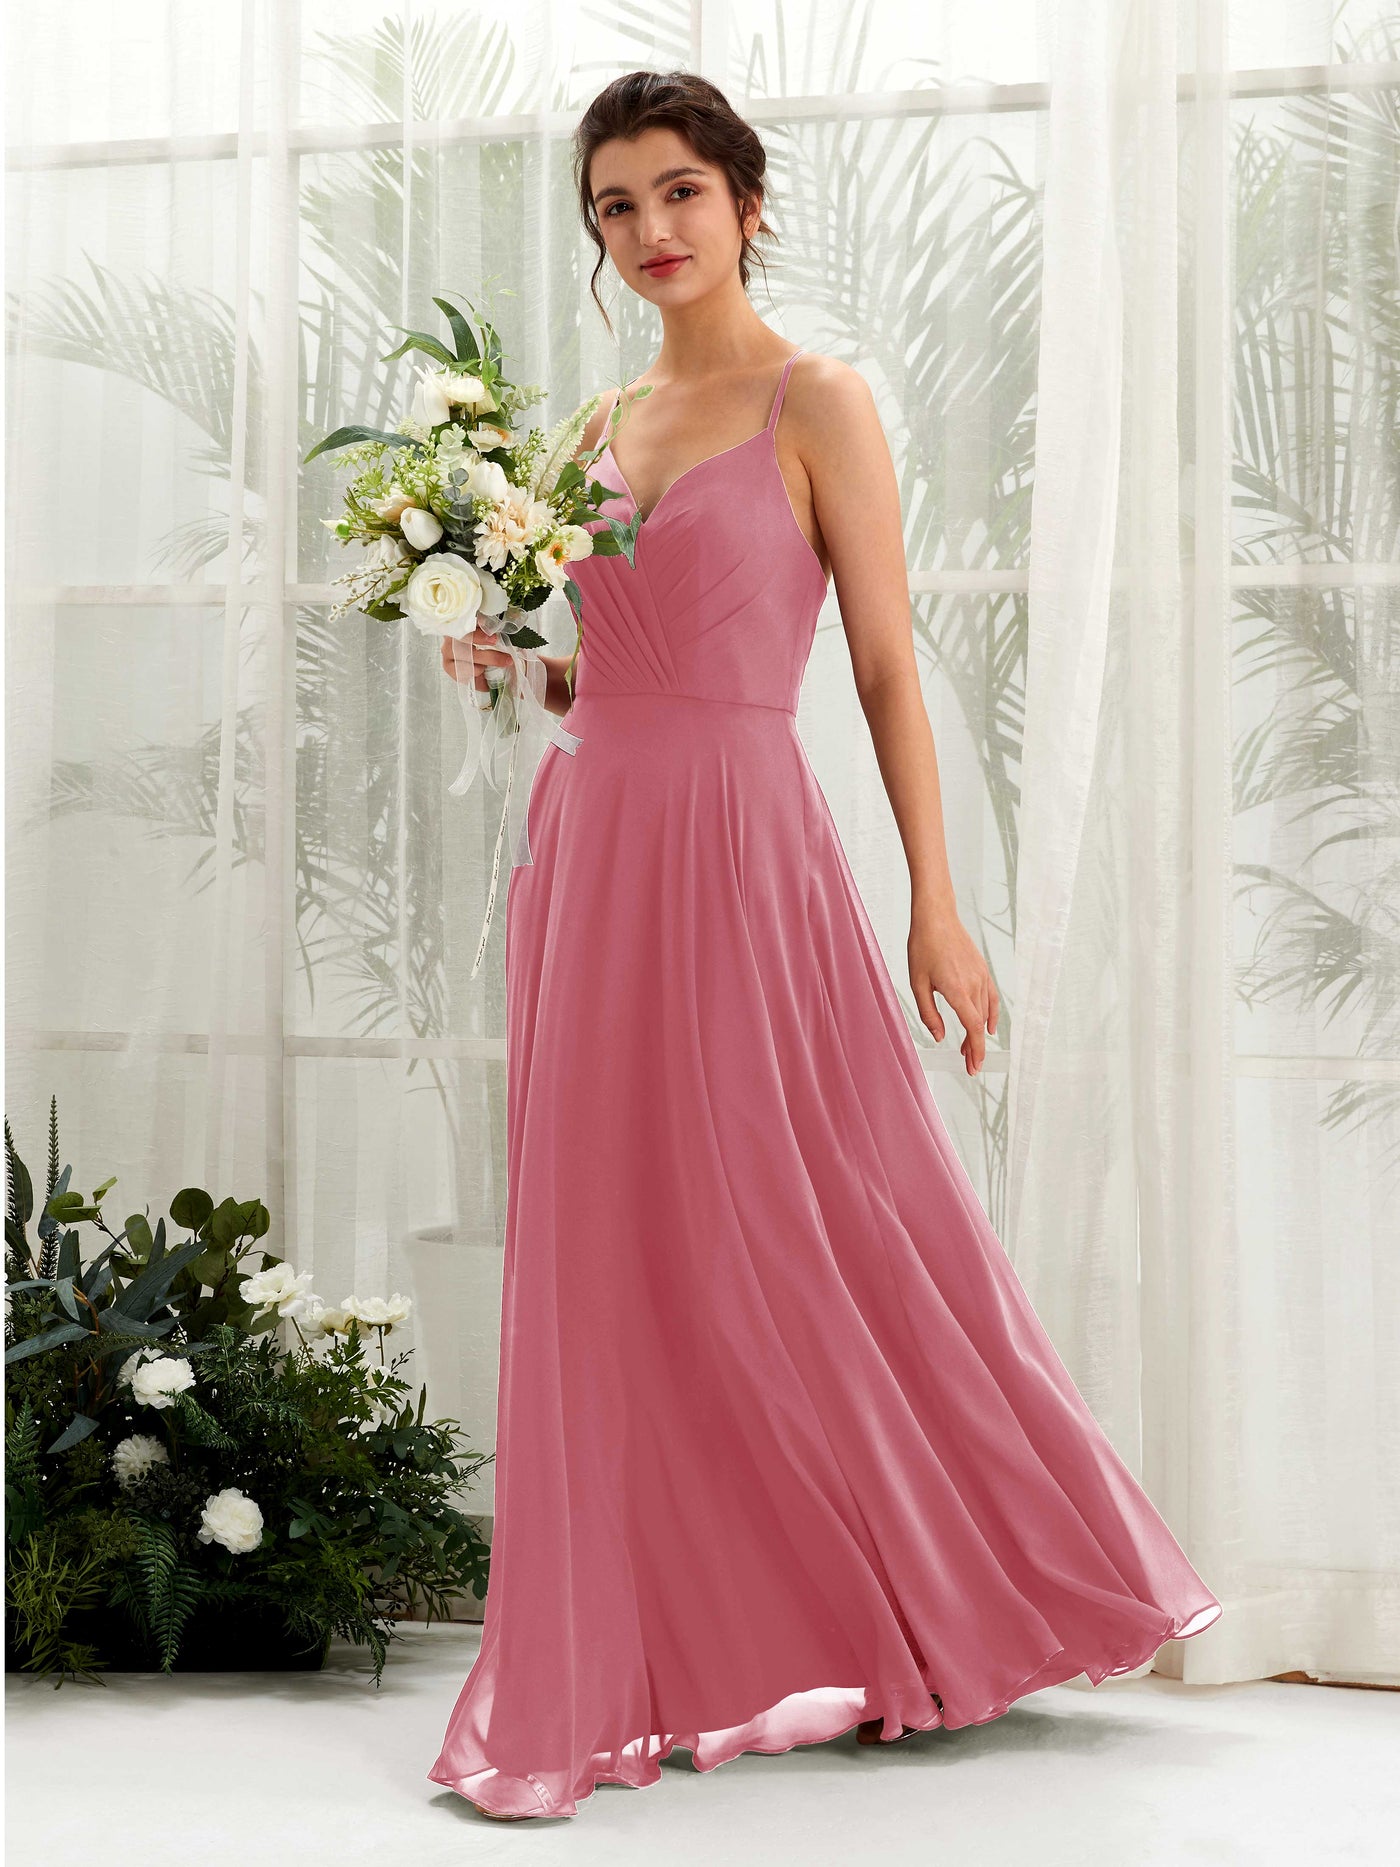 Desert Rose Bridesmaid Dresses Bridesmaid Dress Chiffon Spaghetti-straps Full Length Sleeveless Wedding Party Dress (81224211)#color_desert-rose